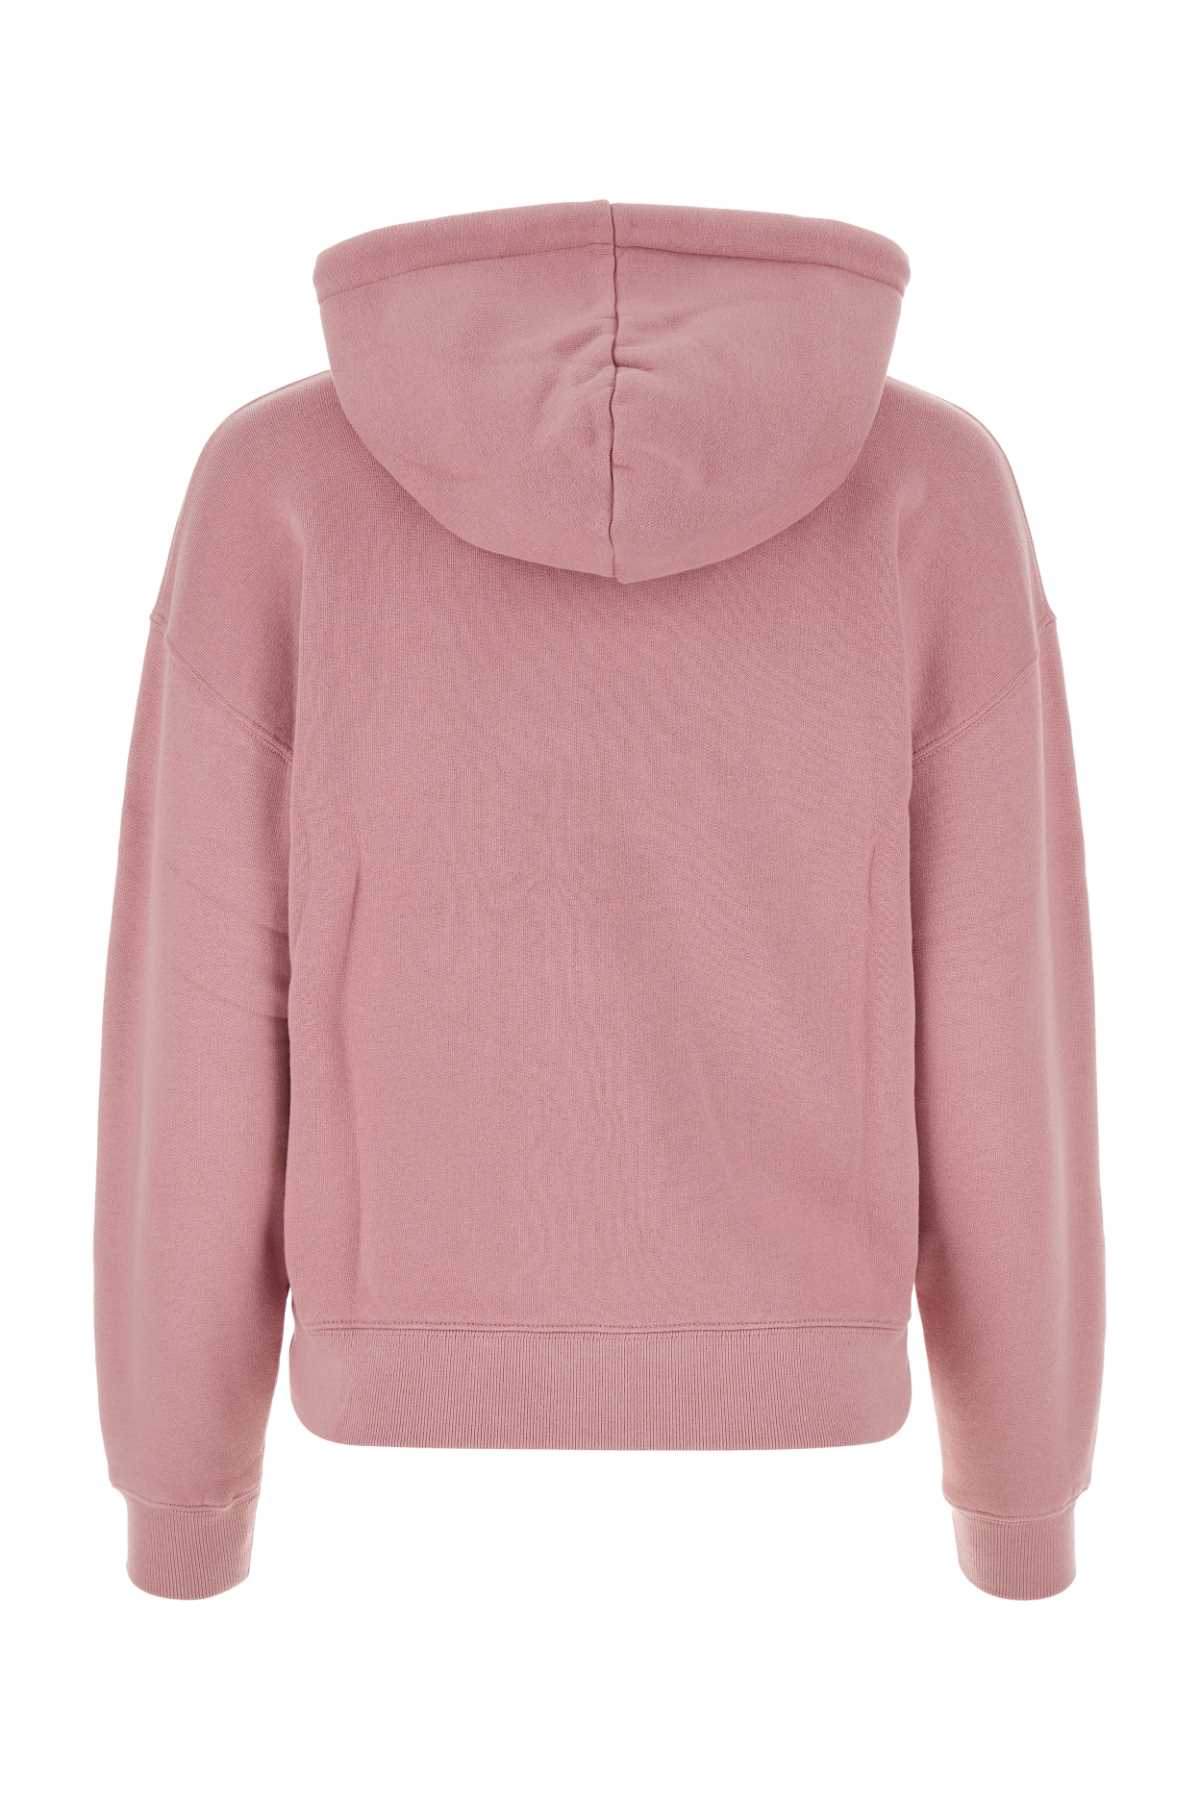 Maison Kitsuné Pink Cotton Sweatshirt In Rosebud